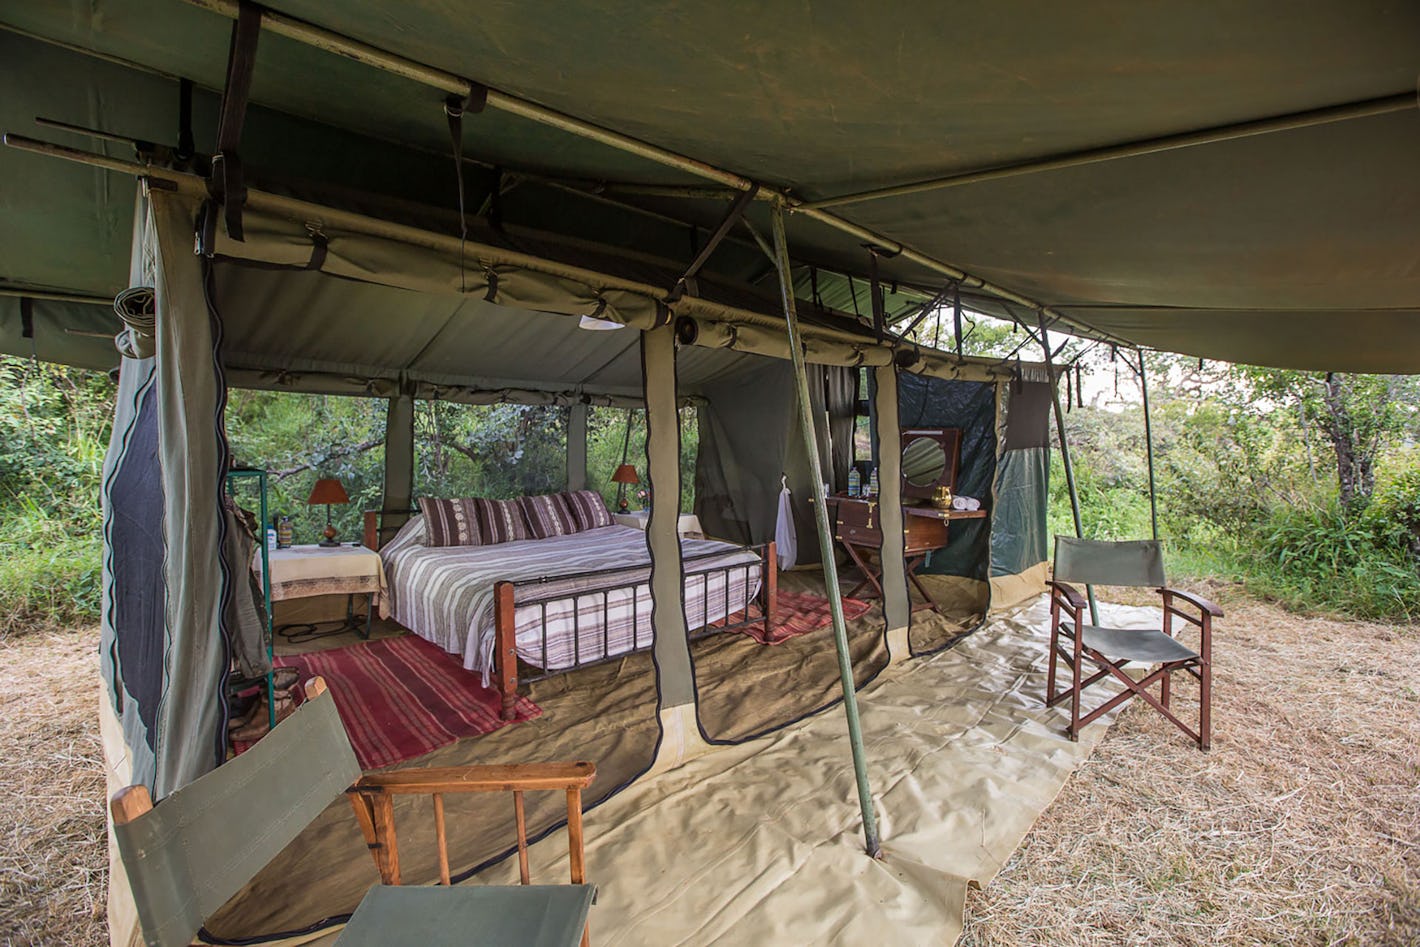 5.Spend the night in a classic safari tent